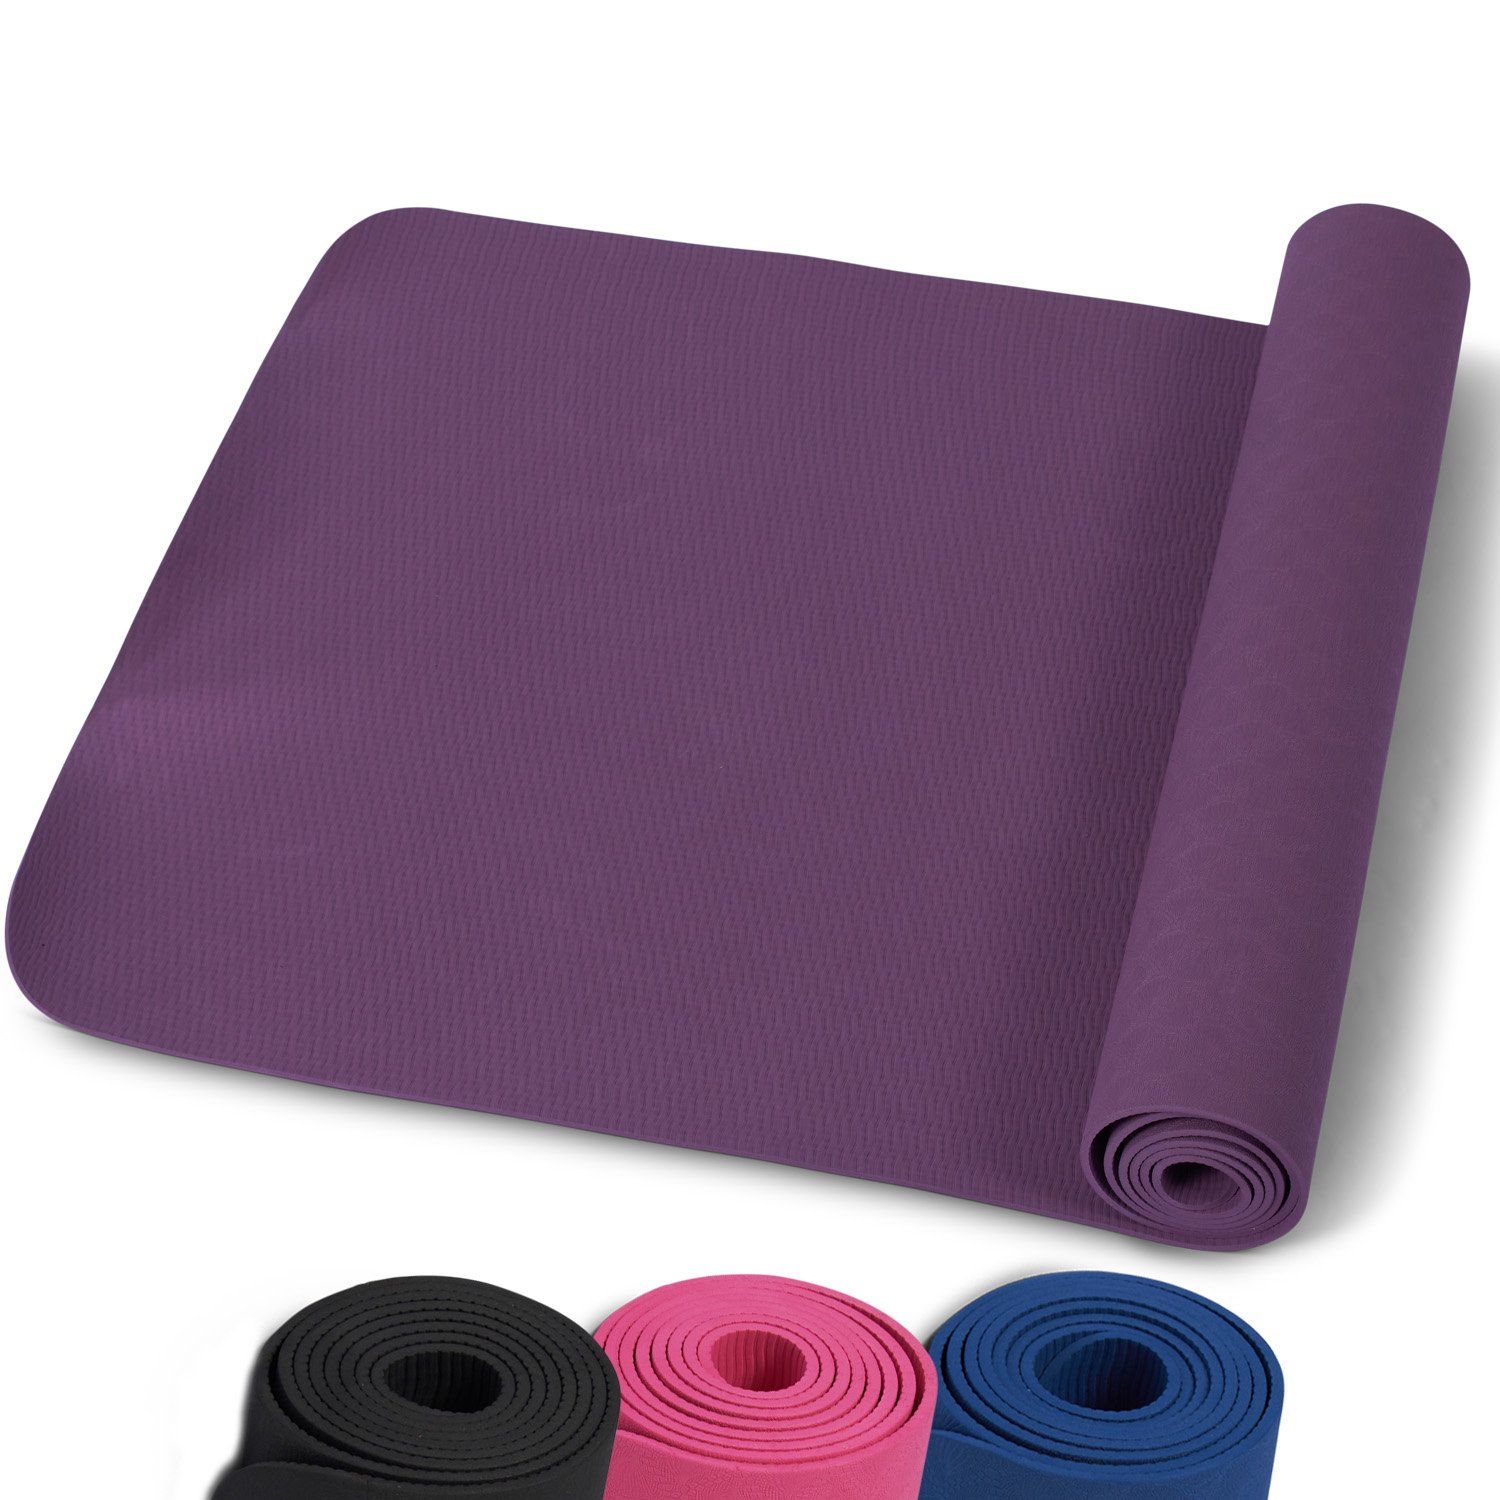 gladiator sports yoga mat purple different colors